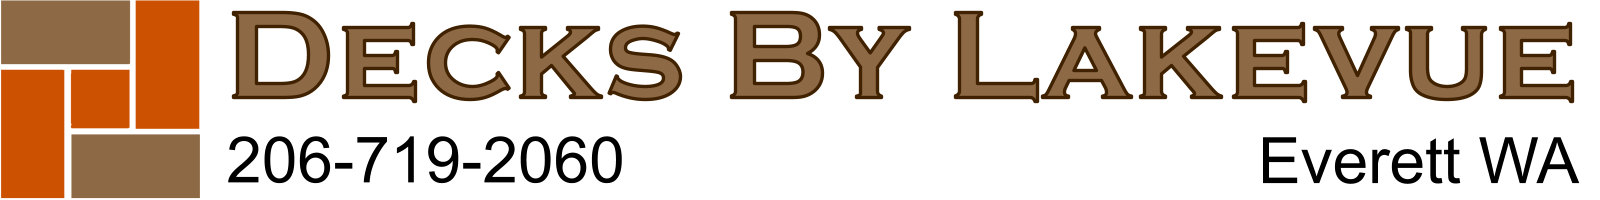 DecksByLakeVue.com Logo and header